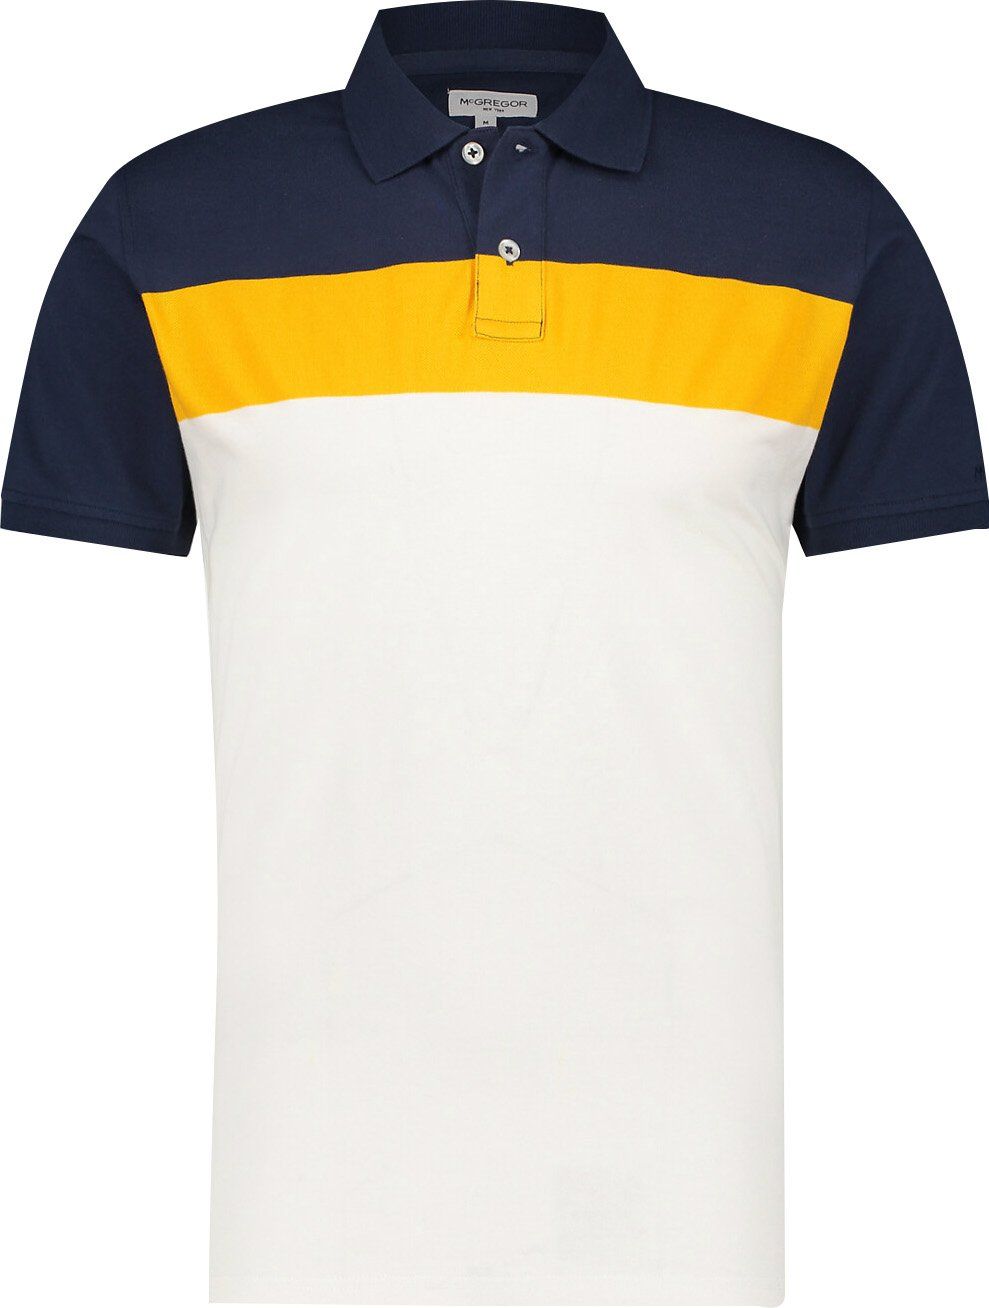 McGregor Polo Shirt Multicolour size L